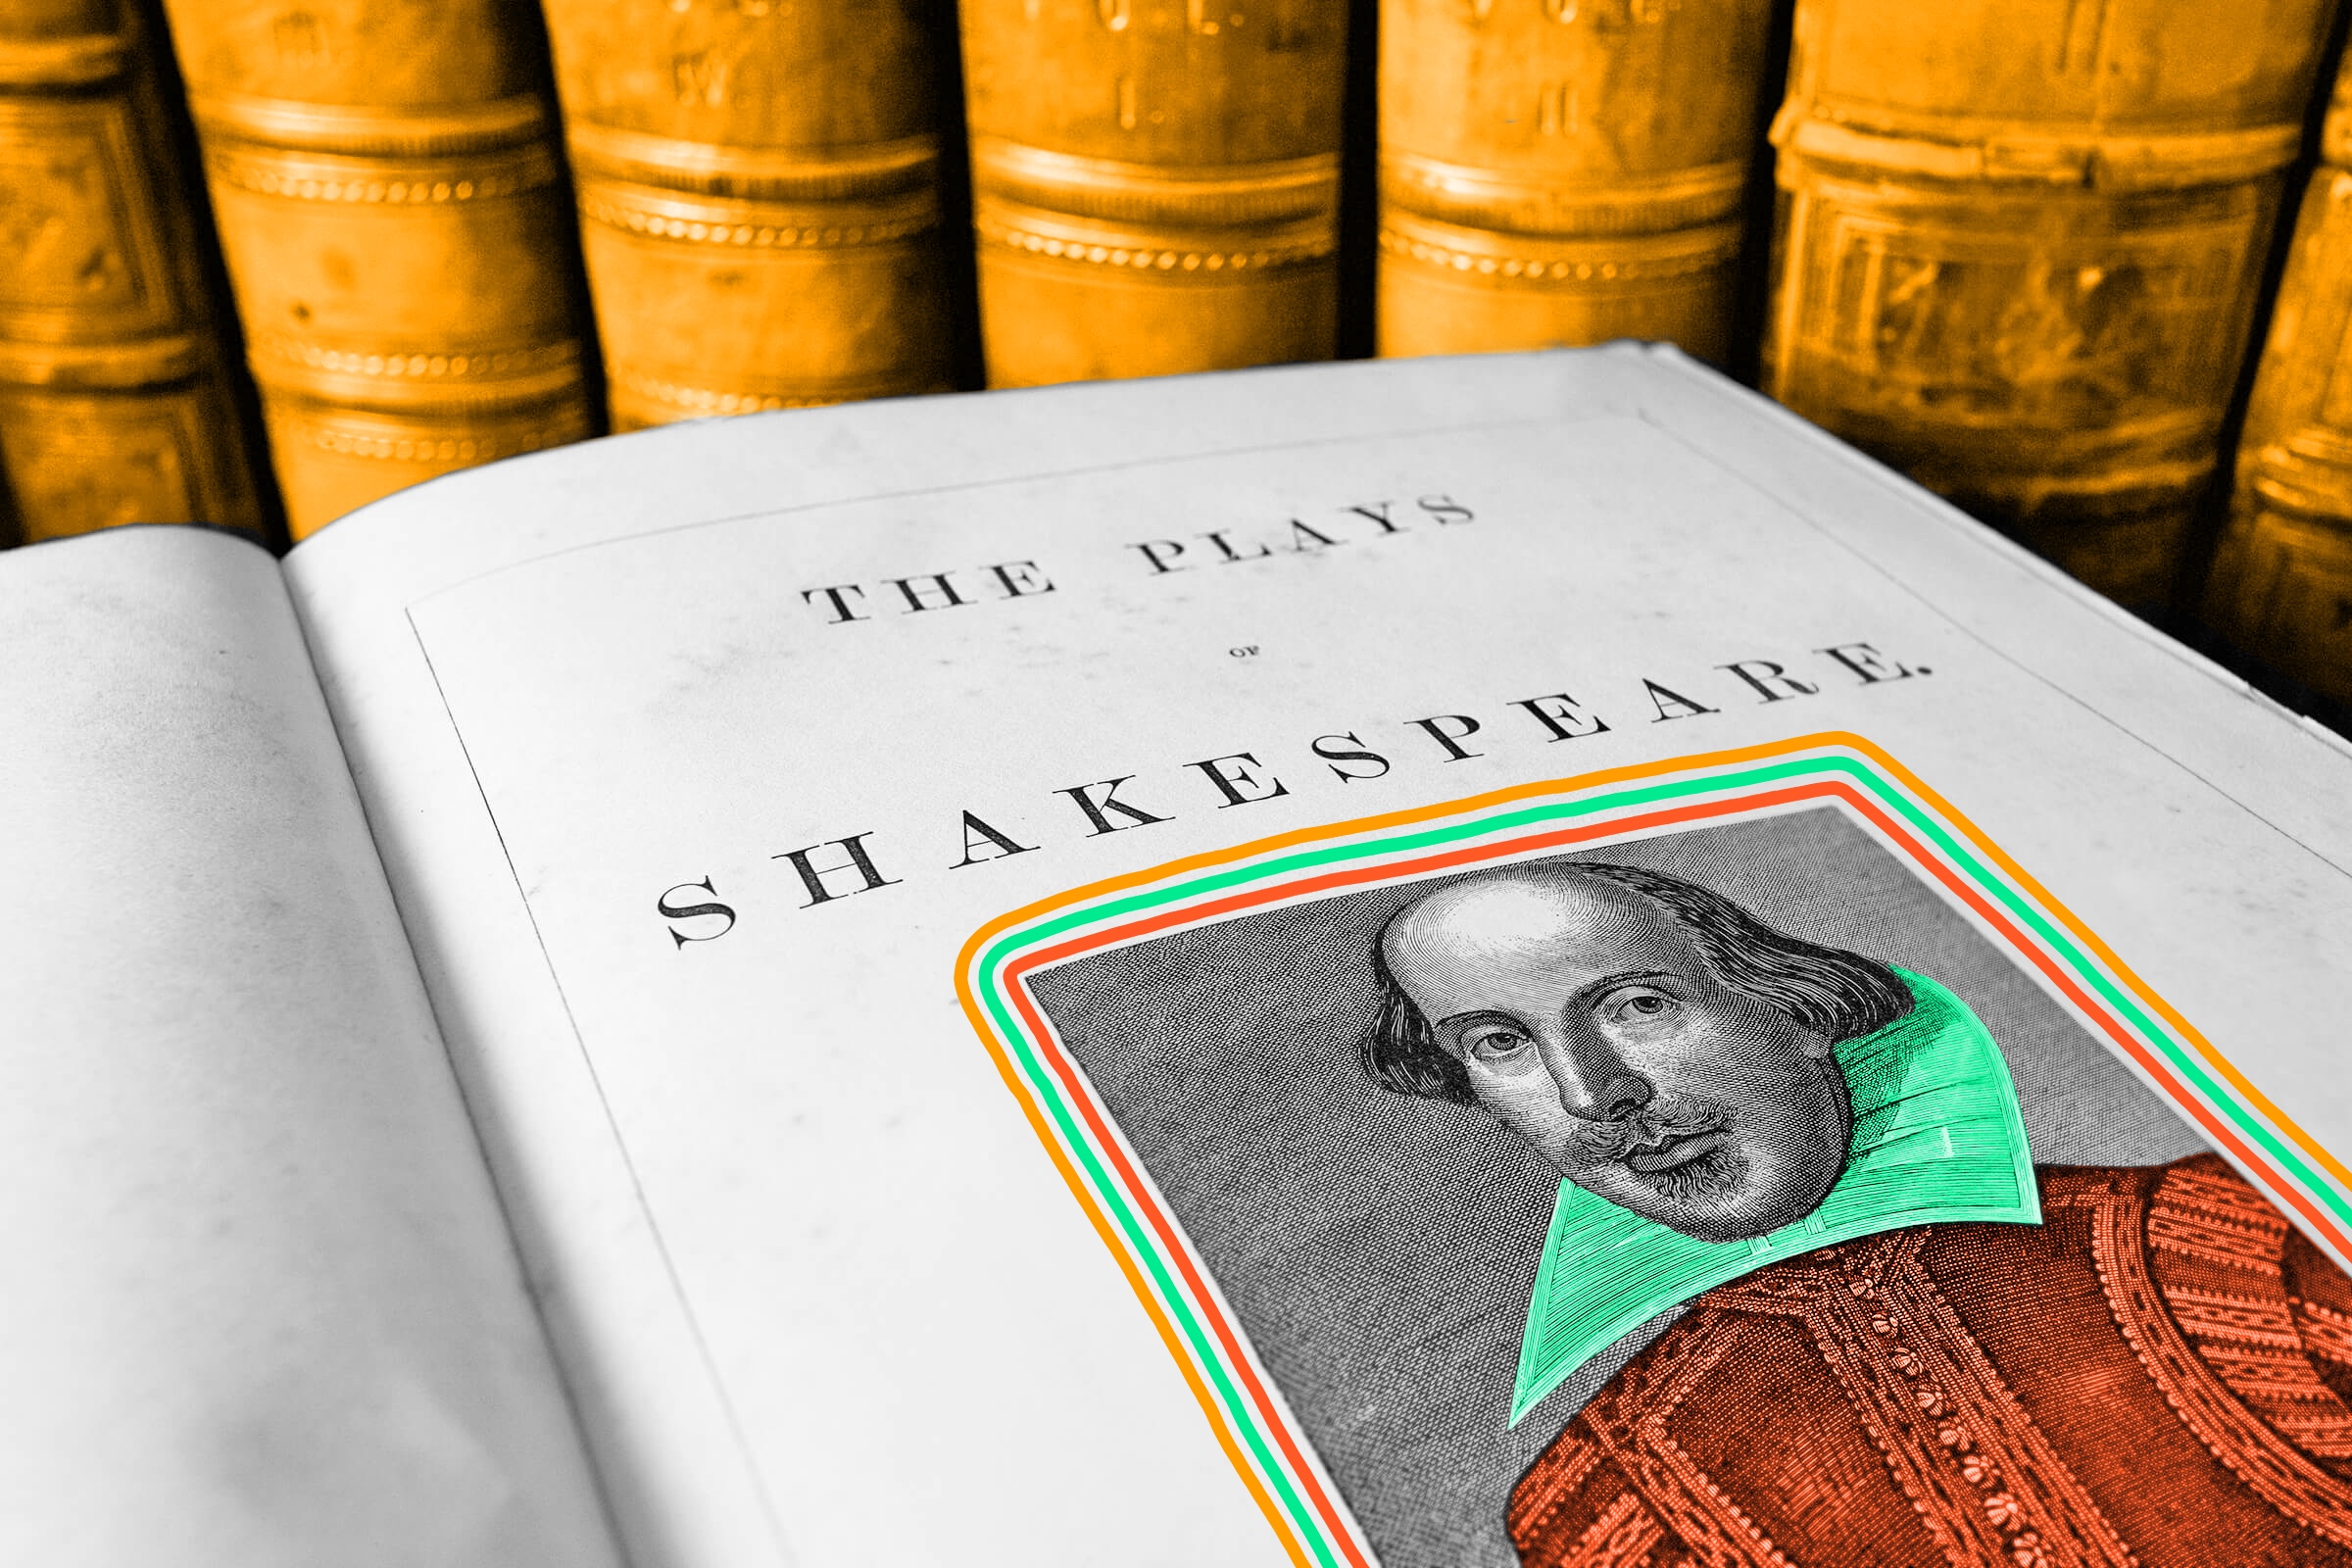 Knock-knock jokes may have originated in Shakespeare's "Macbeth."